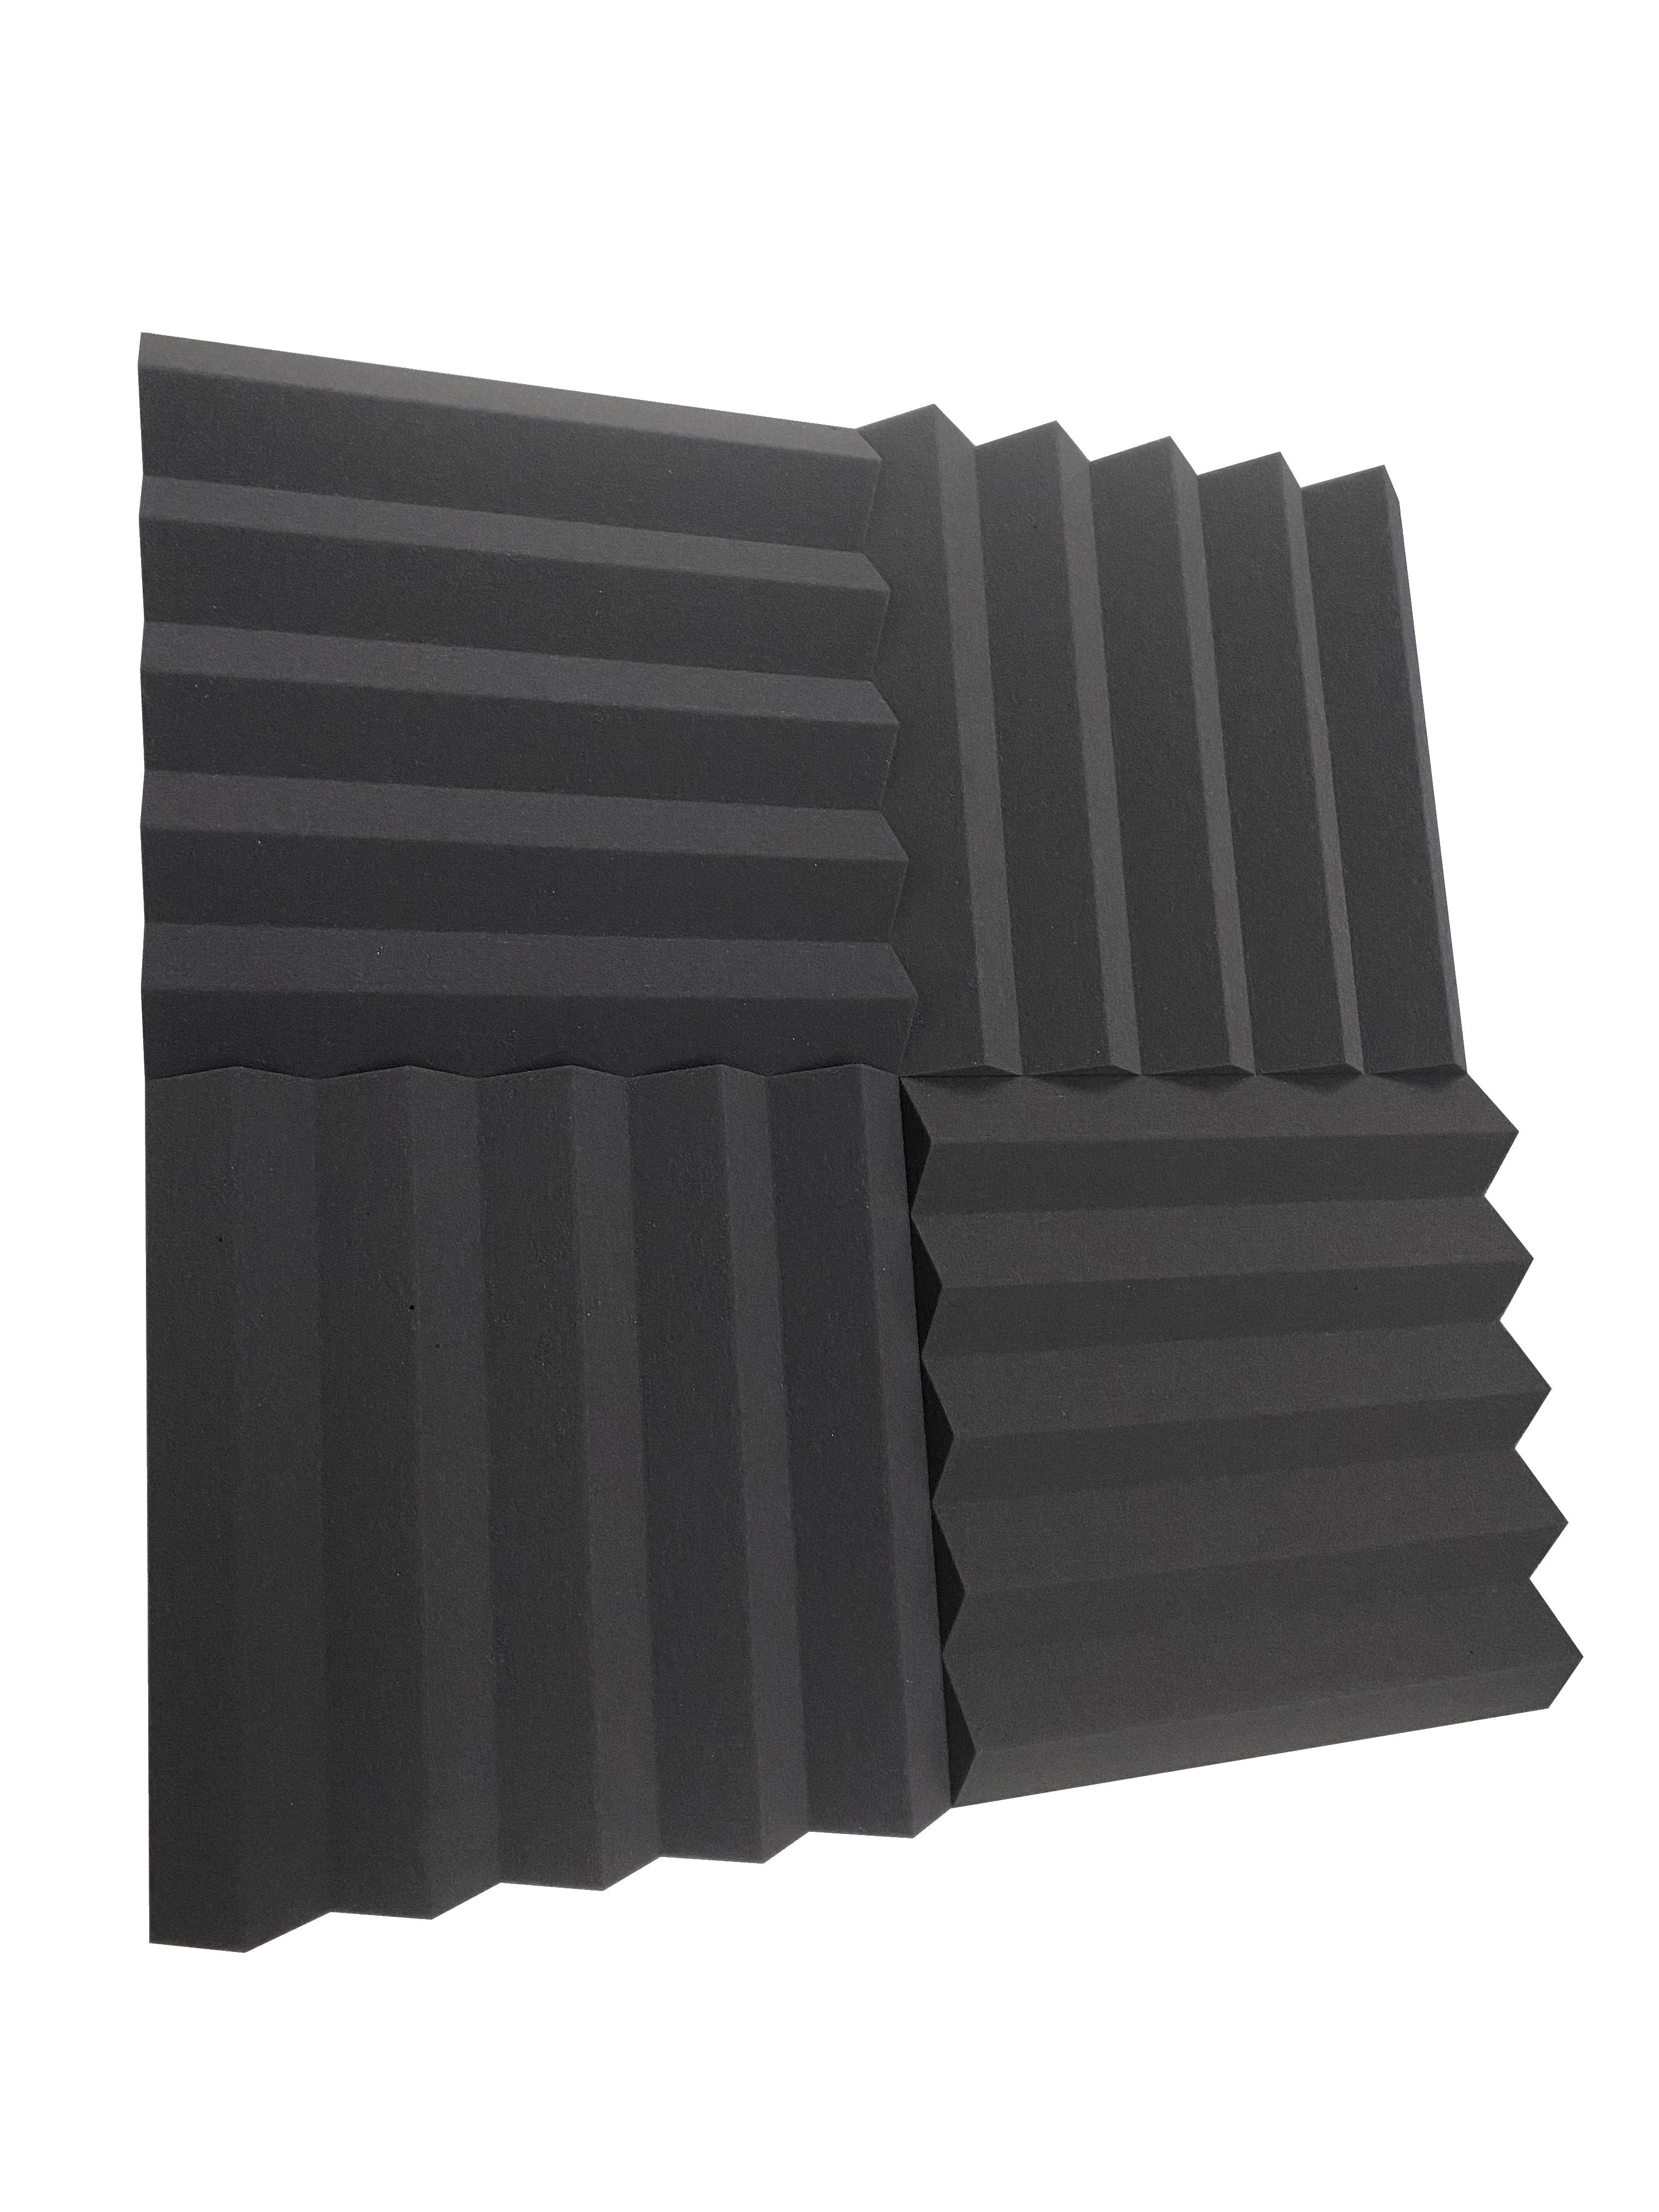 Kaufen dunkelgrau Wedge PRO Combo Acoustic Studio Foam Tile Kit – 42 Fliesen, 13,92 m² Abdeckung